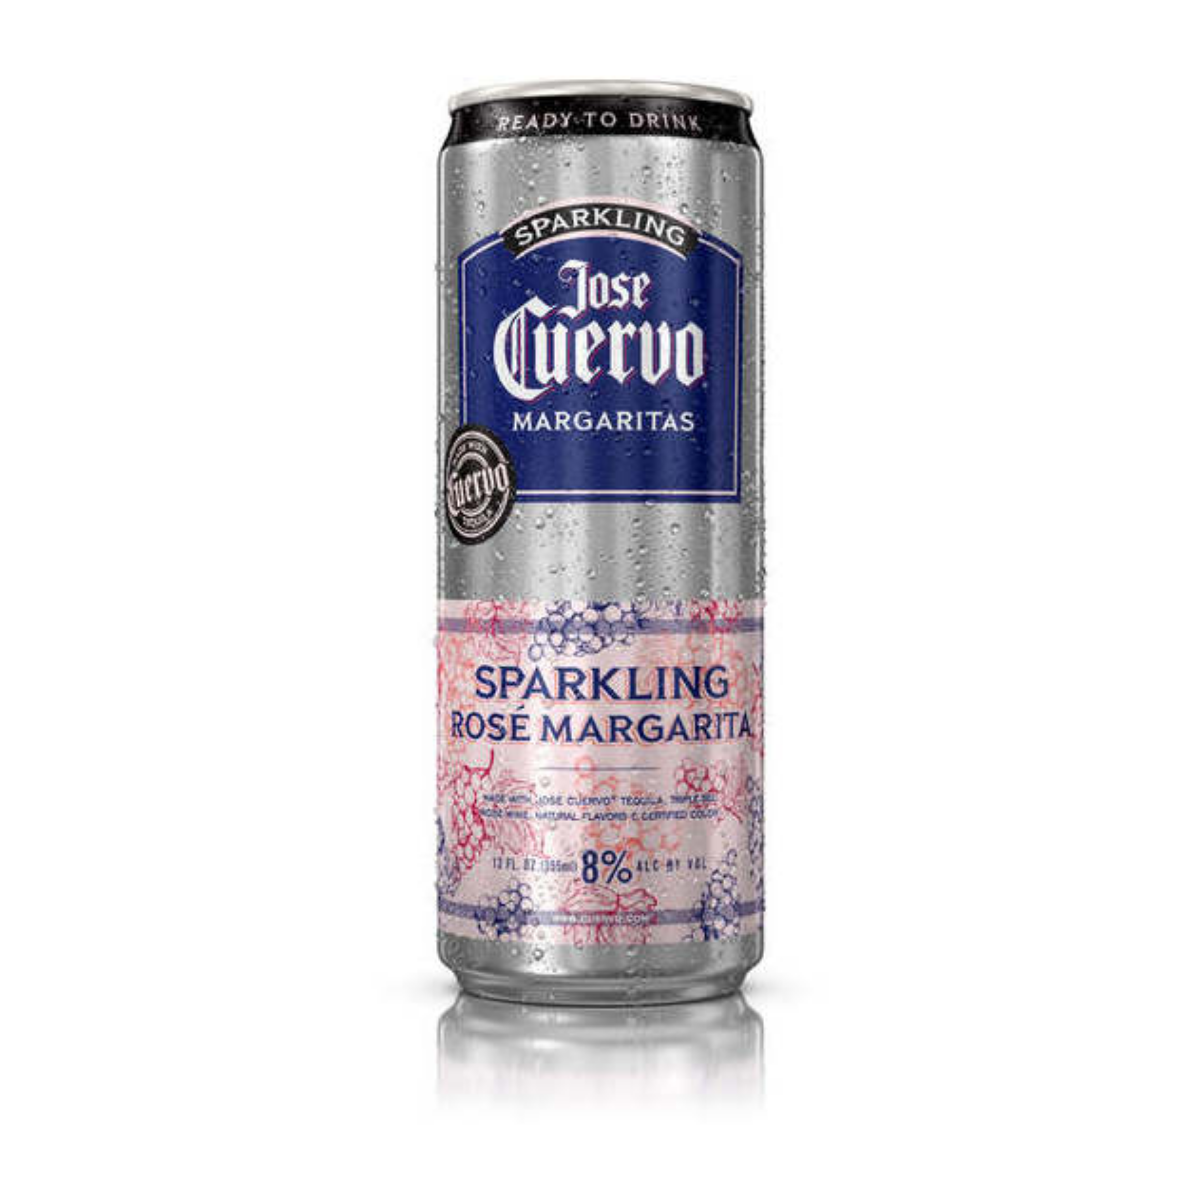 Jose Cuervo Sparkling Rose Margarita 4pk Cans